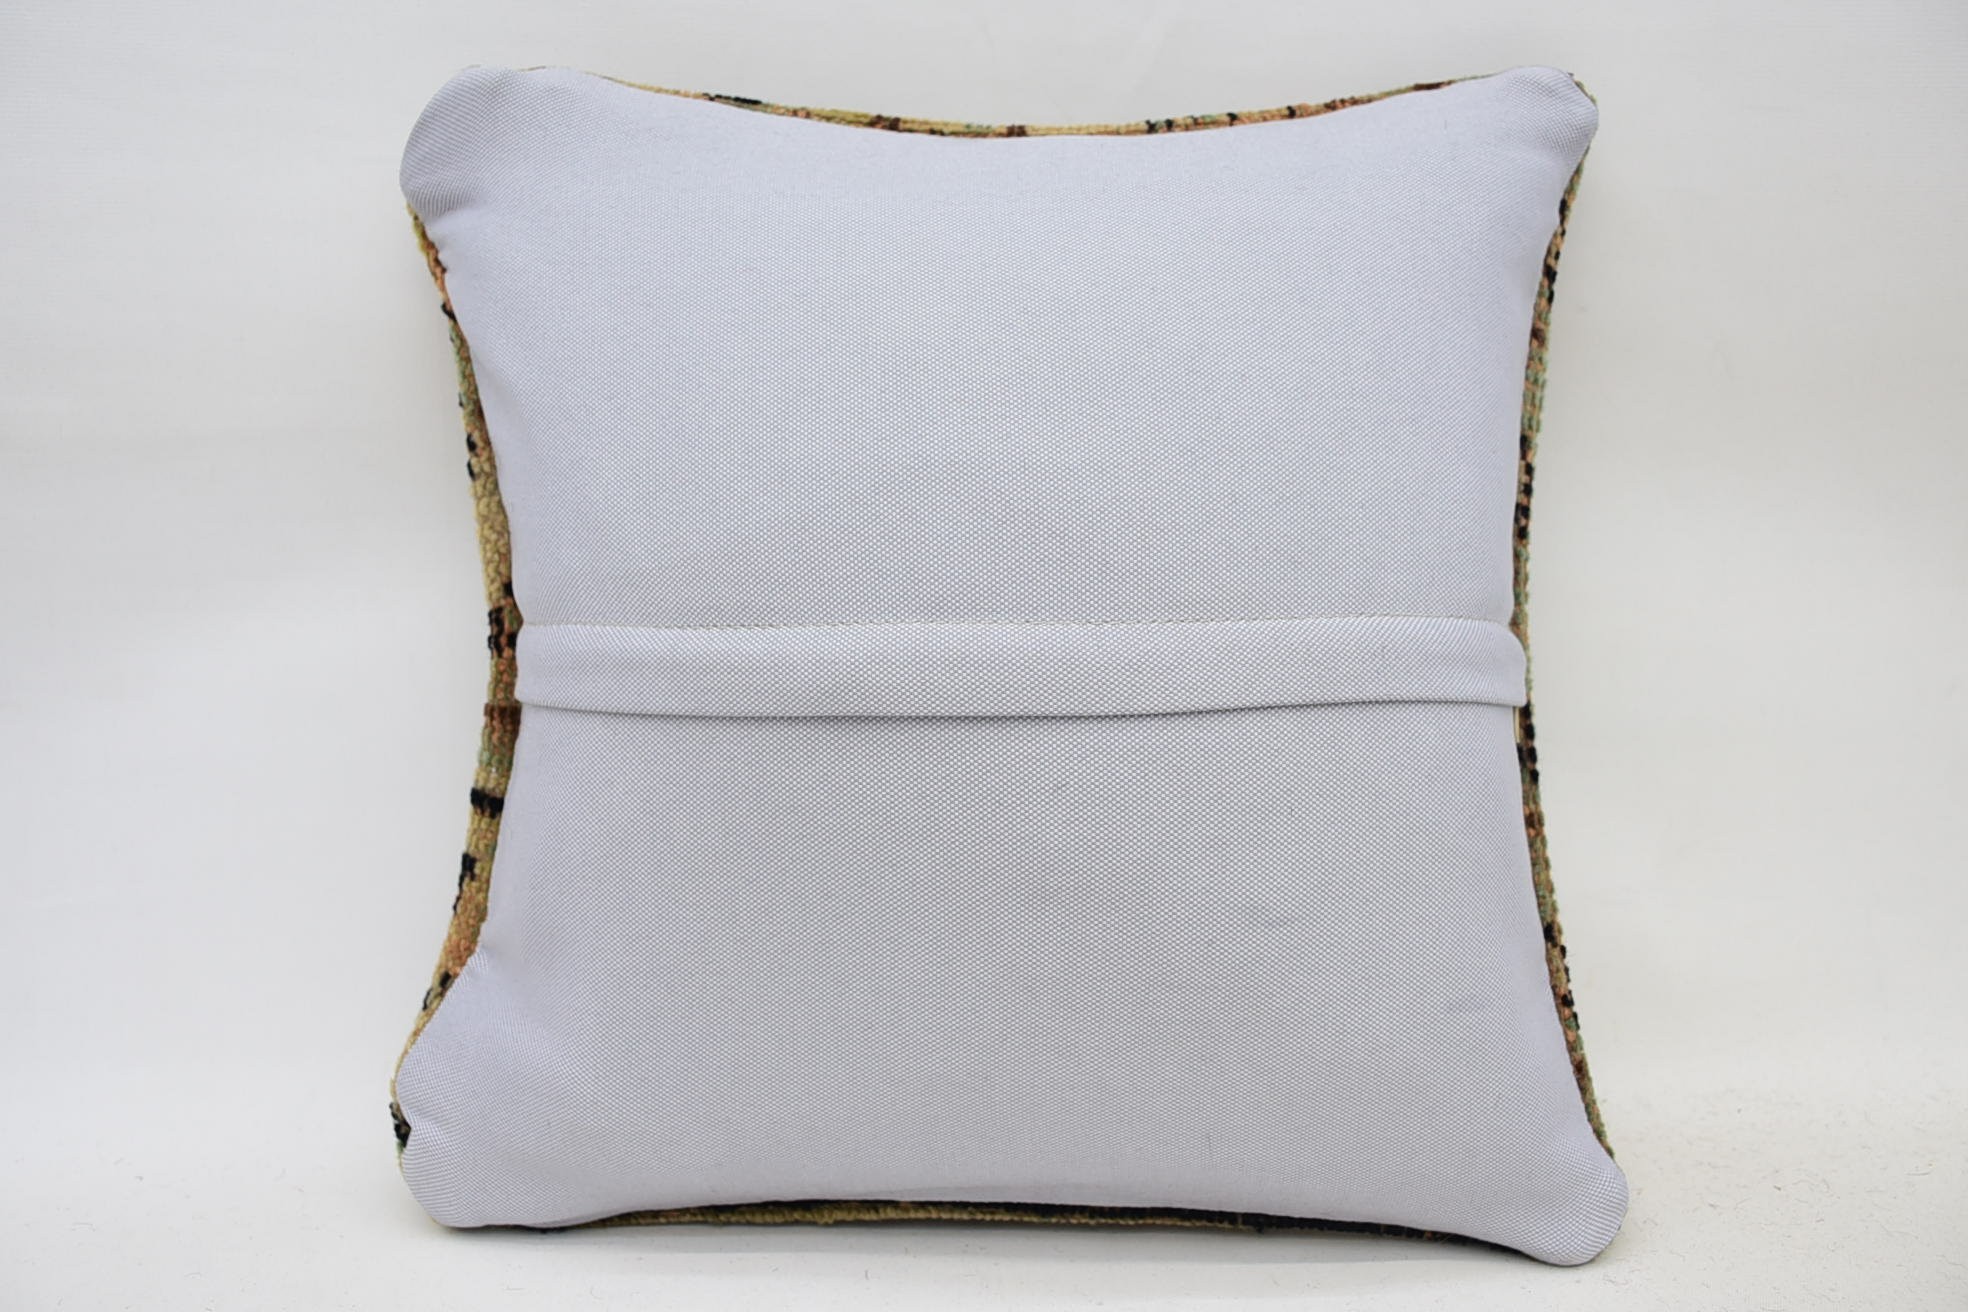 Retro Pillow Sham, Antique Pillows, Meditation Pillow Cover, Kilim Pillow, Retro Throw Pillow Case, Vintage Pillow, 14"x14" Beige Cushion